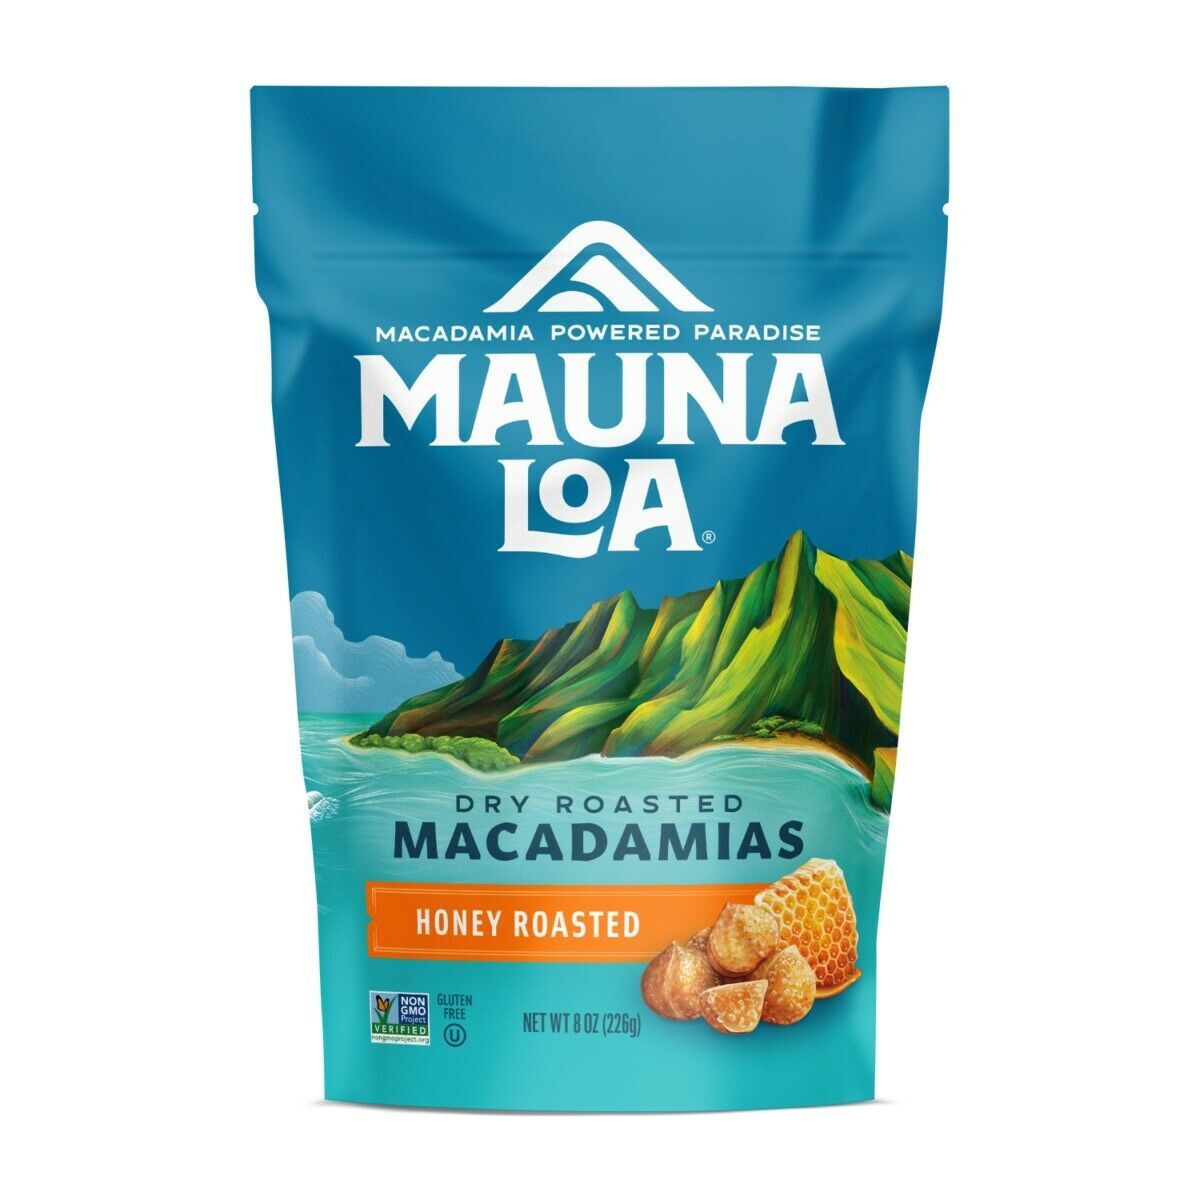 Primary image for mauna loa Honey Roasted Macadamia nuts 8 oz bag (Pack of 6)